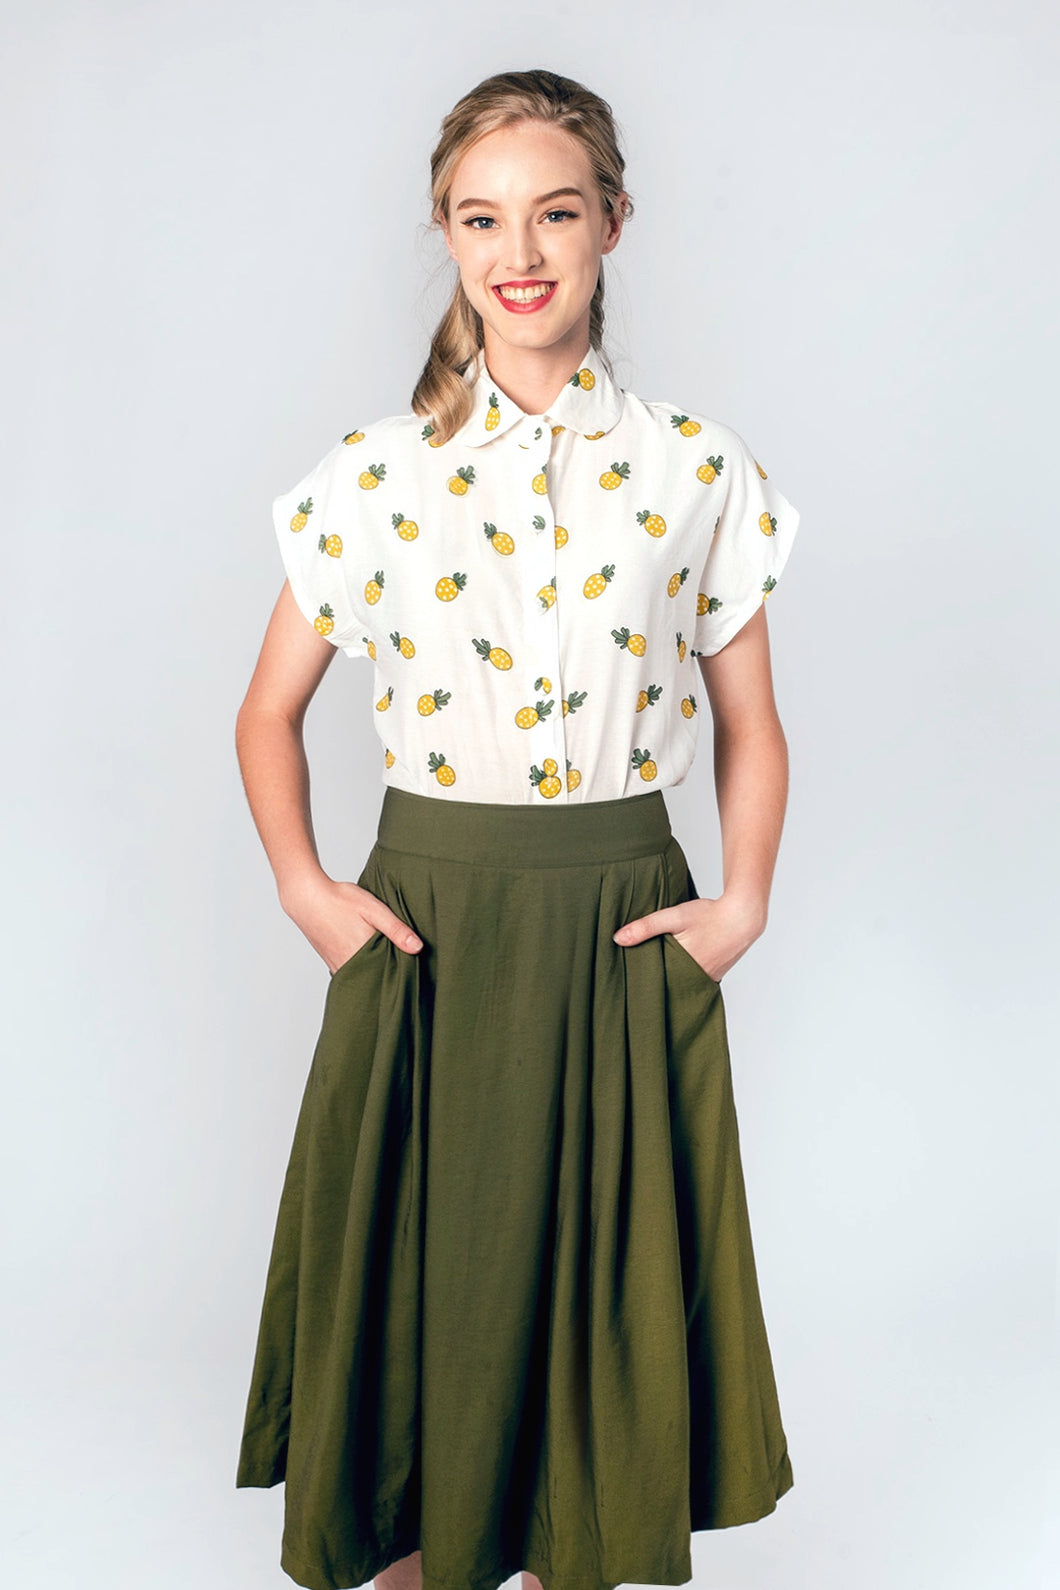 Roxy Green Tussah Skirt